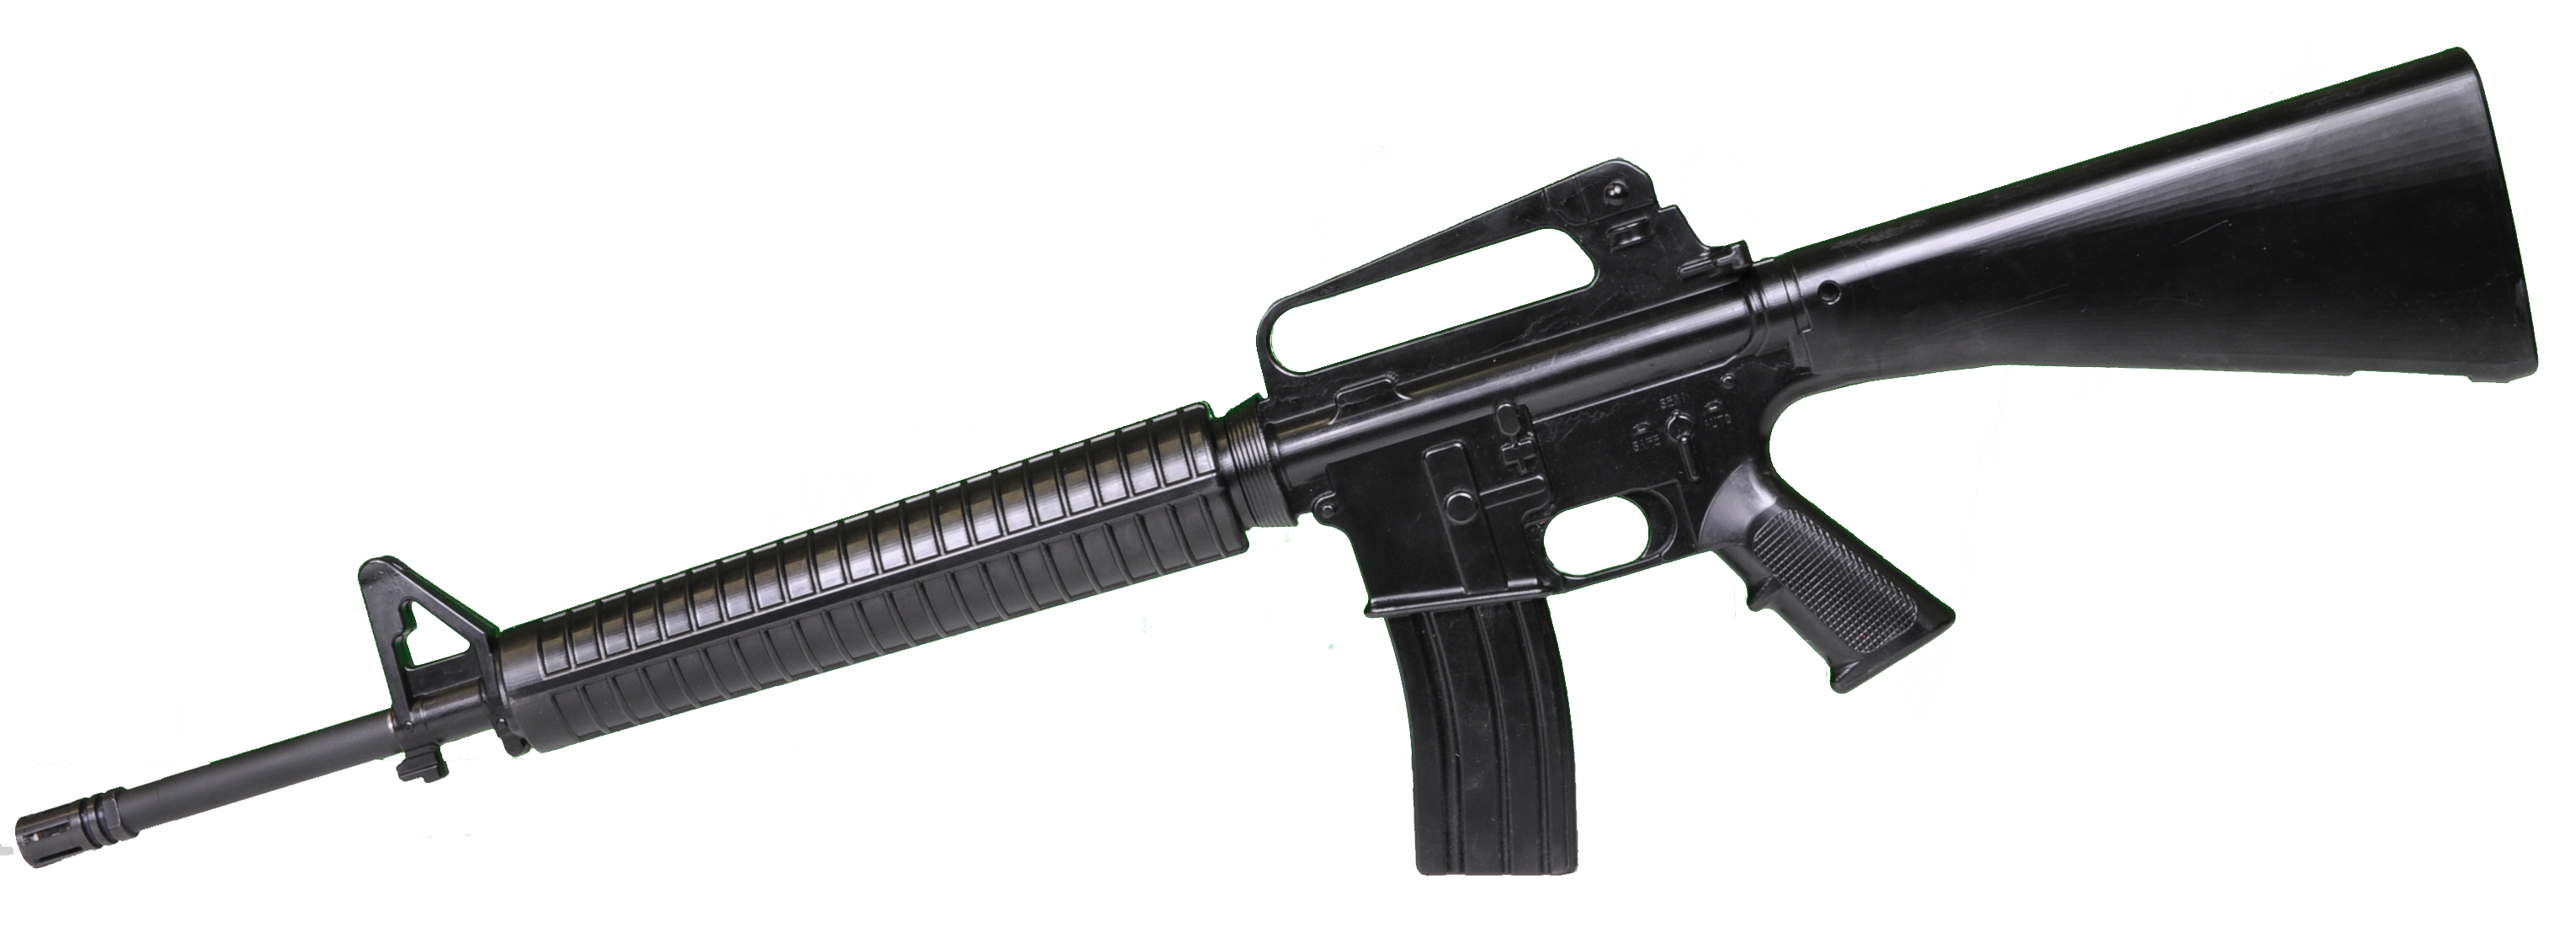 Rifle de assalto americano M16